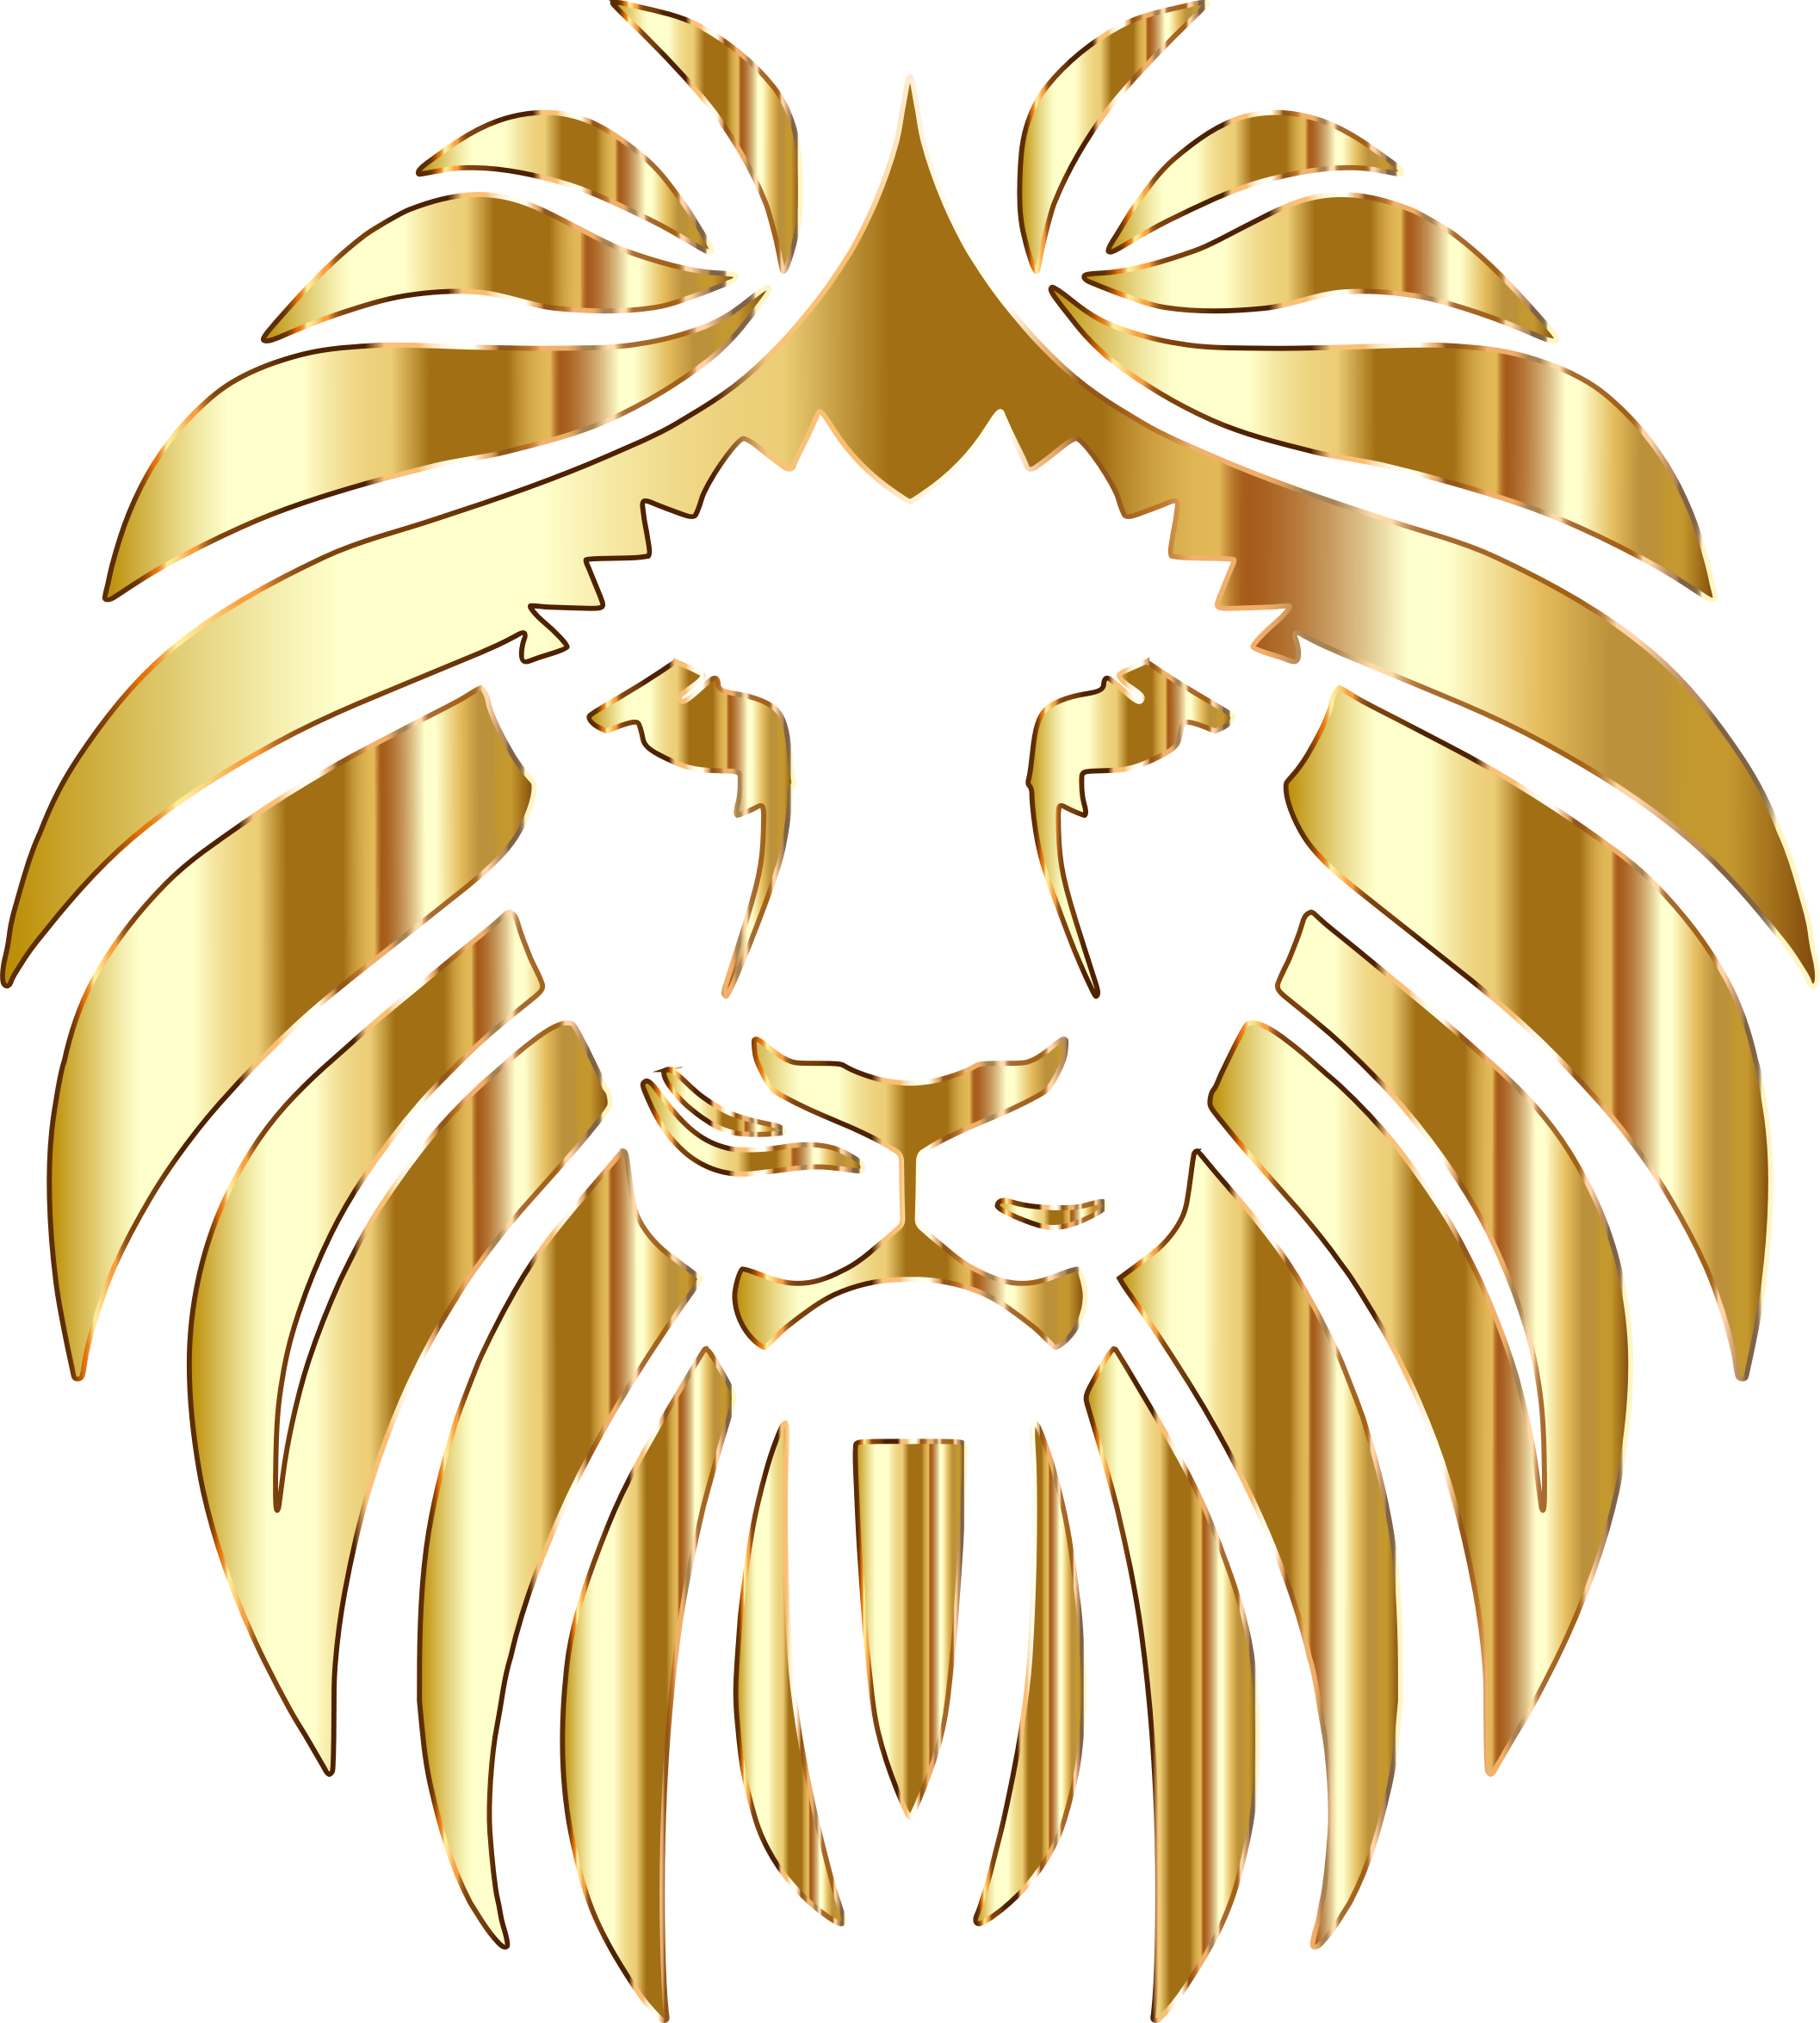 Lion King logo vector illustration design.gold lion king head sign concept  isolated black background 10386550 Vector Art at Vecteezy